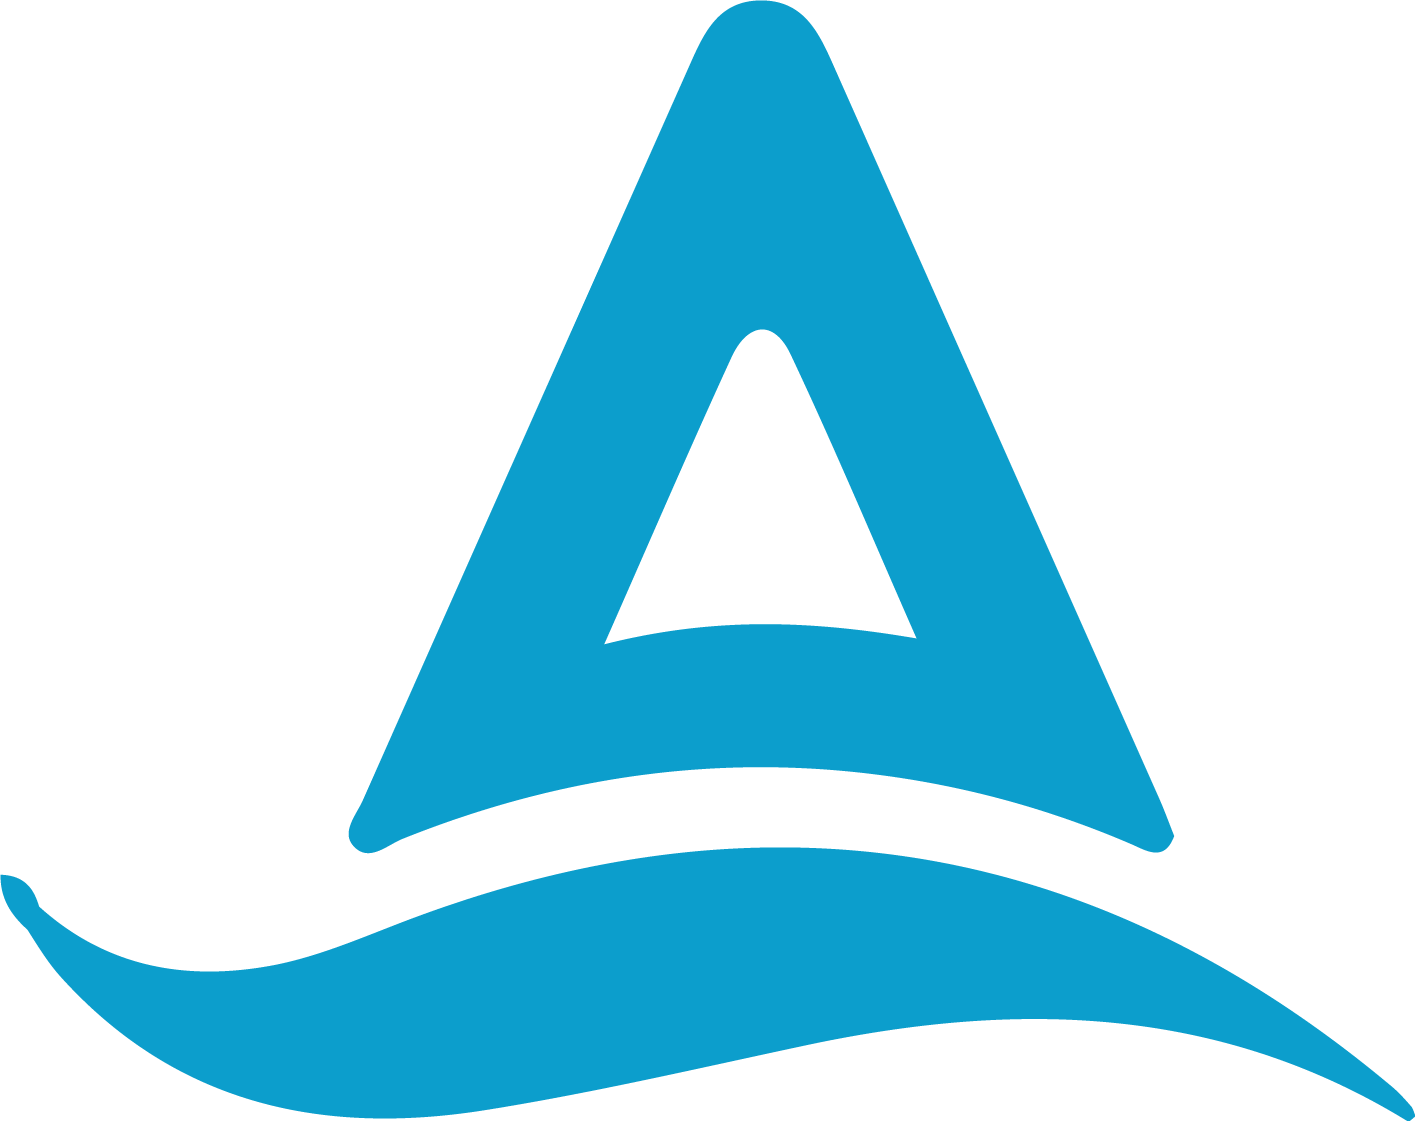 NewAge logo (transparent PNG)